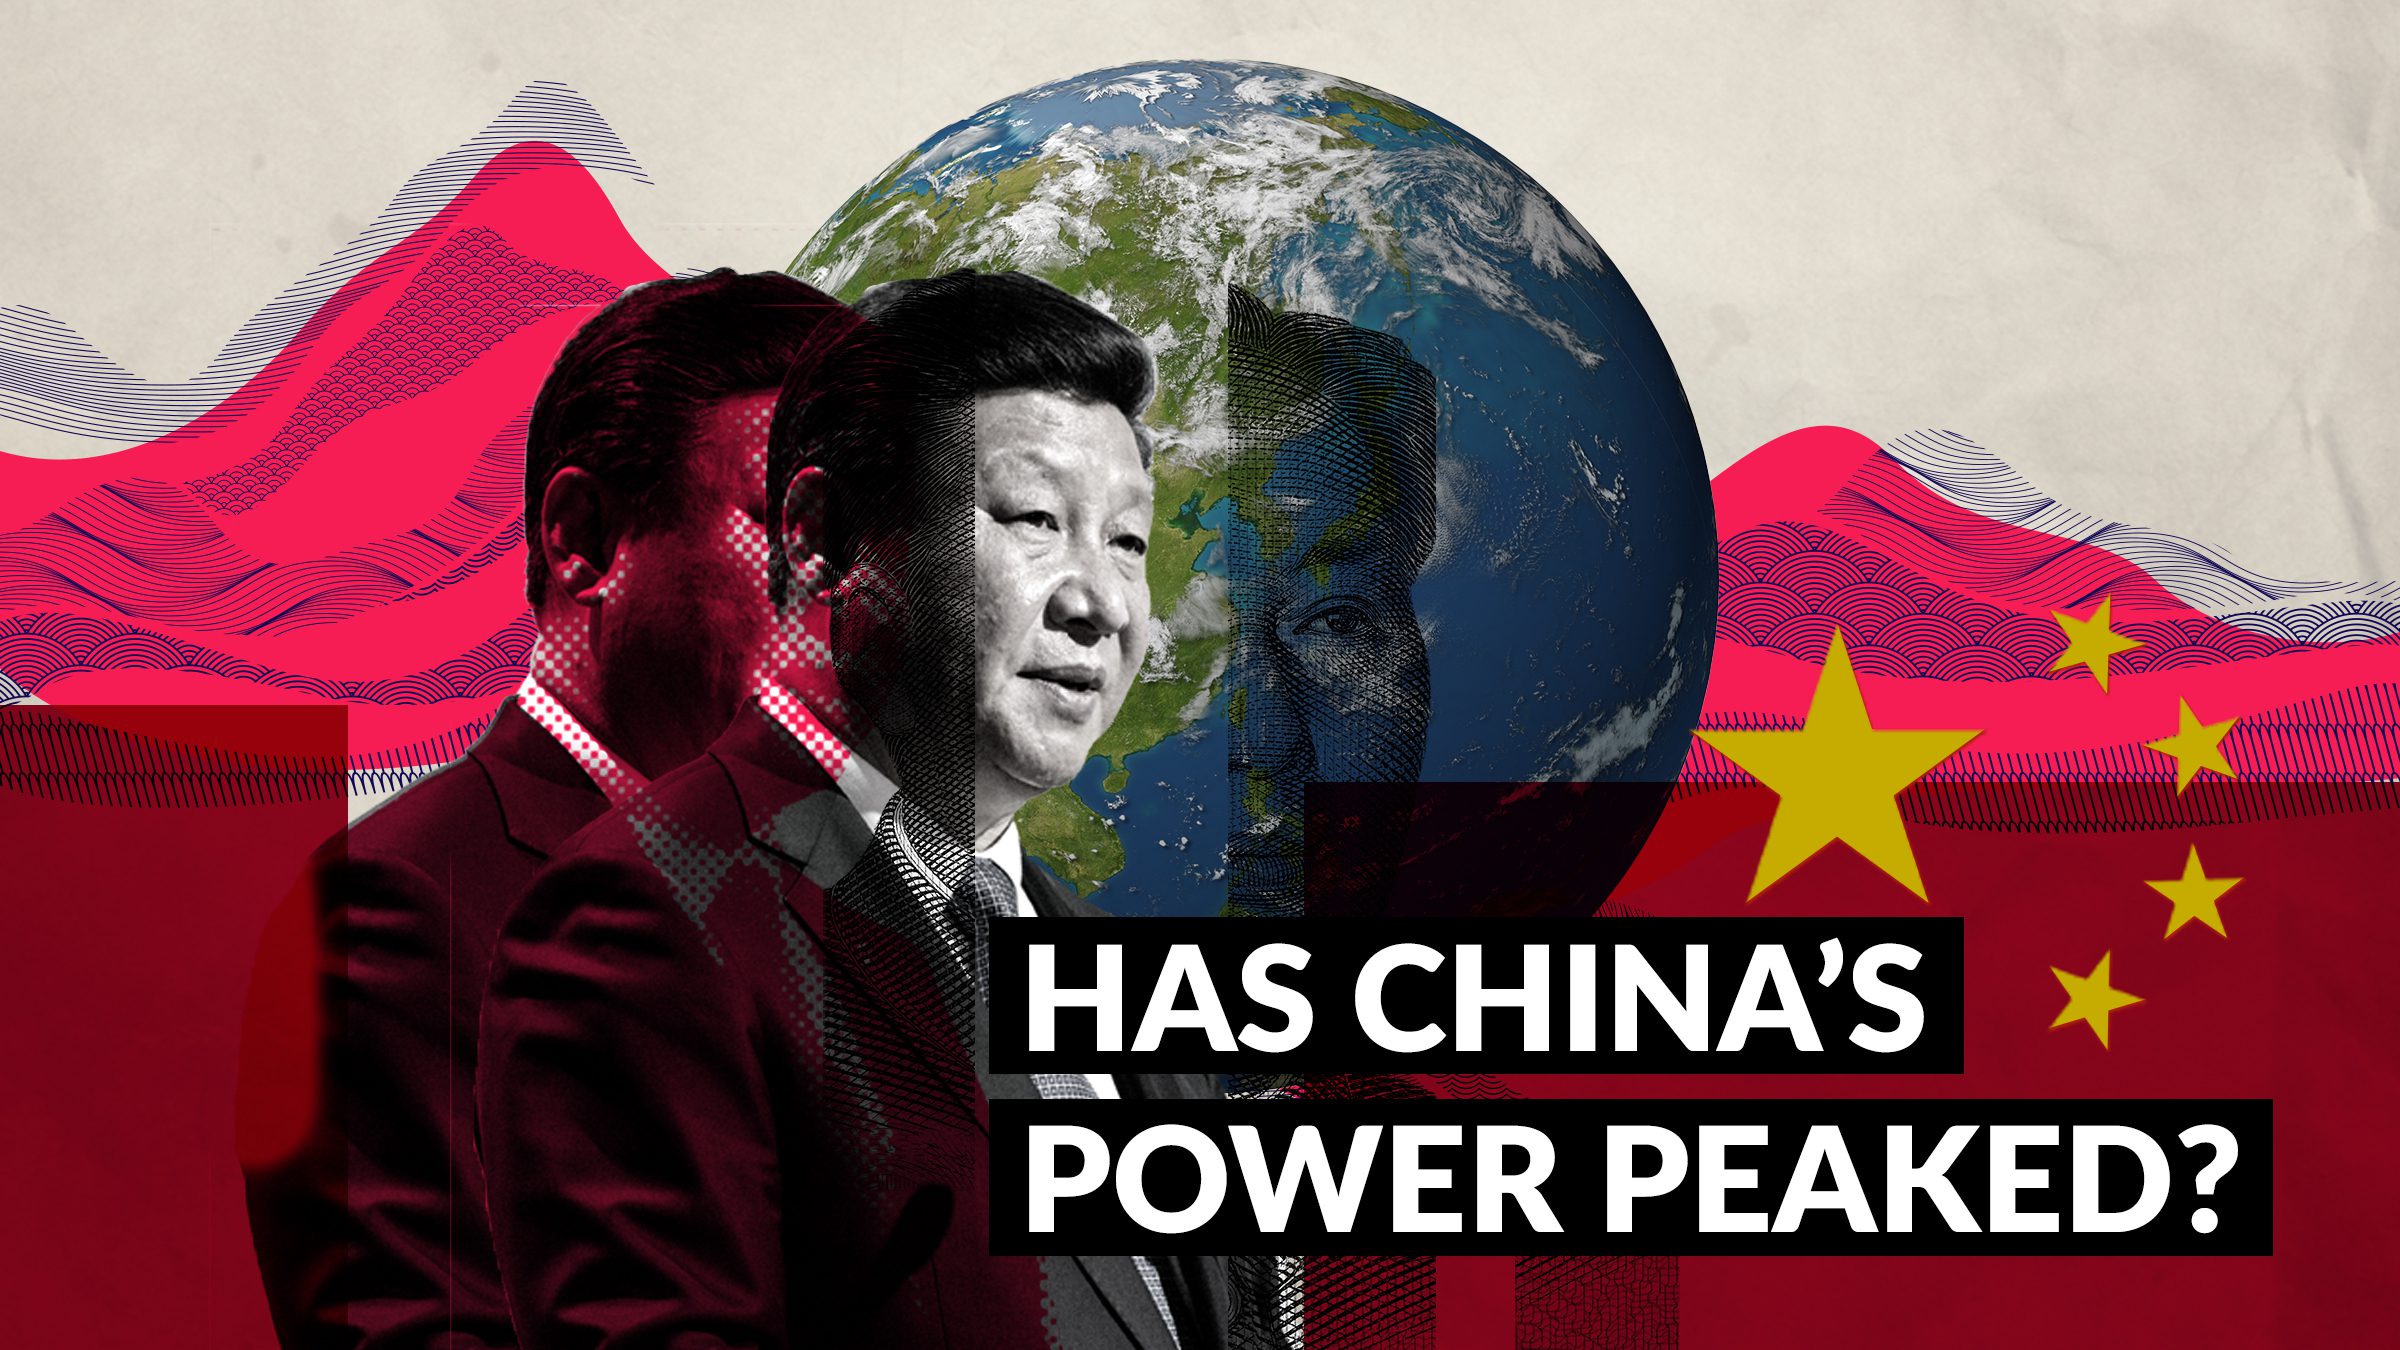 China's Power Peaked Debate